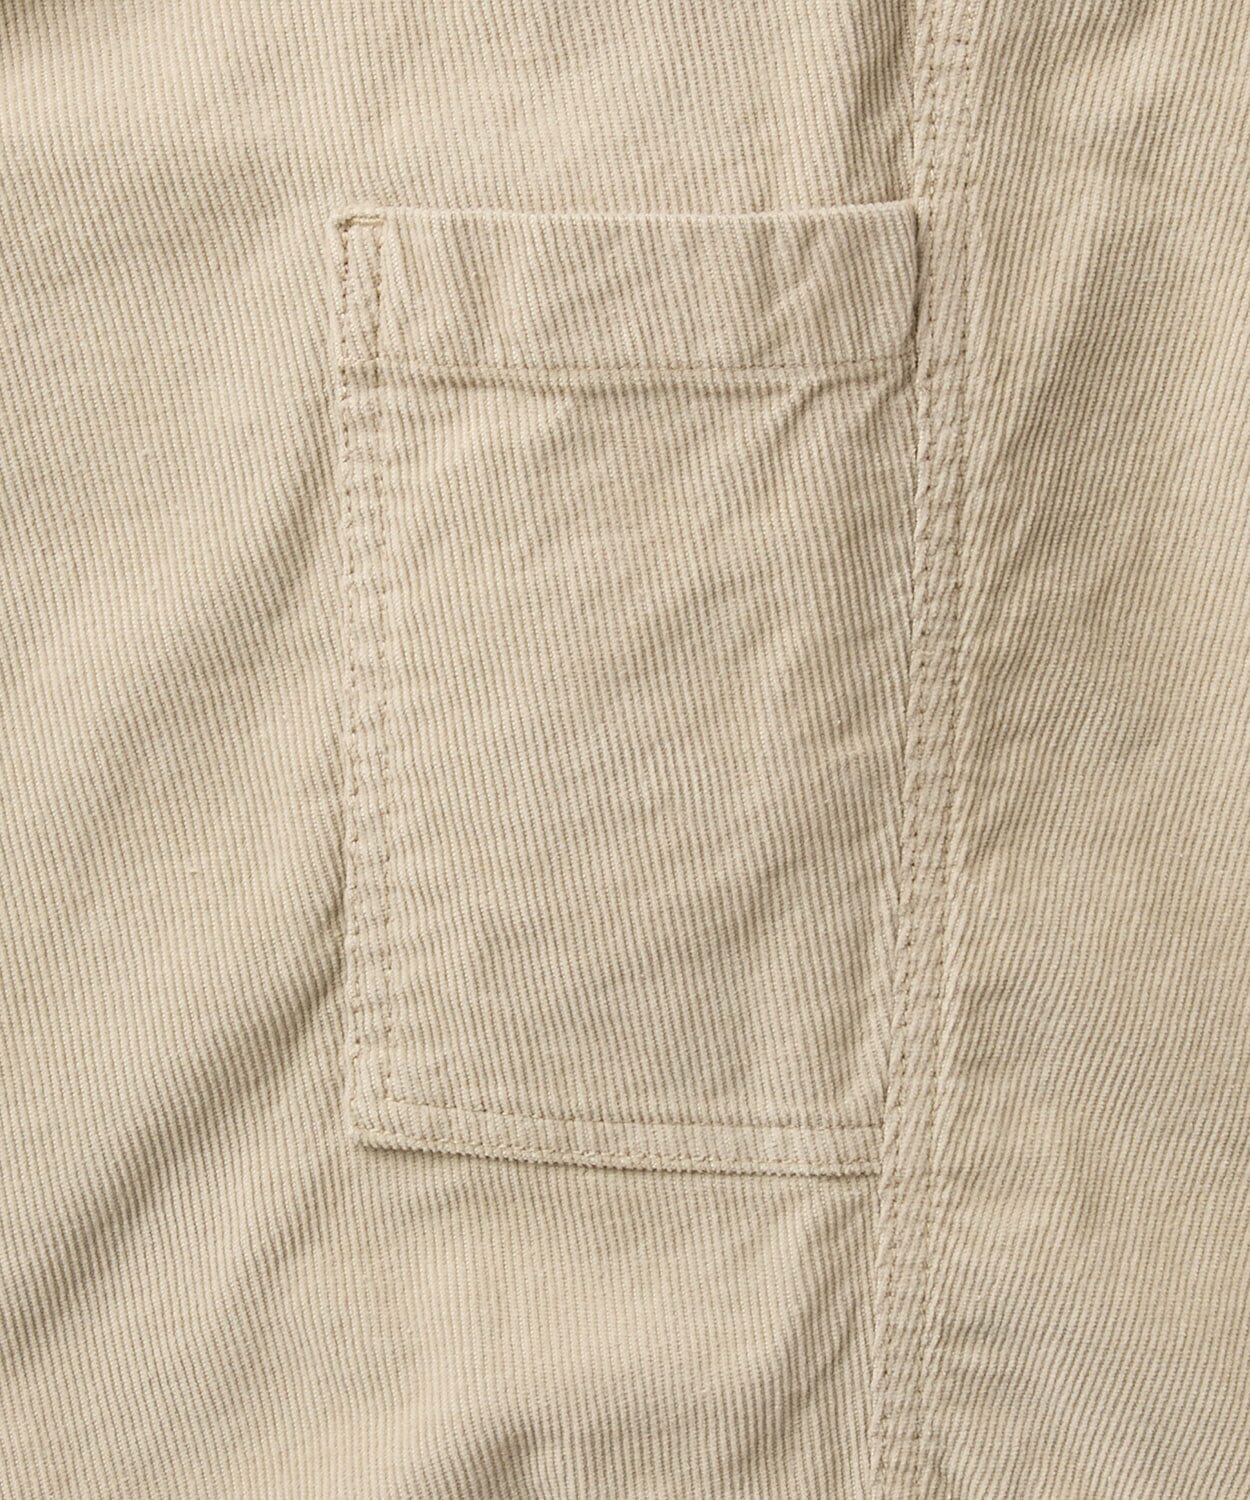 details of corduroy pants for men